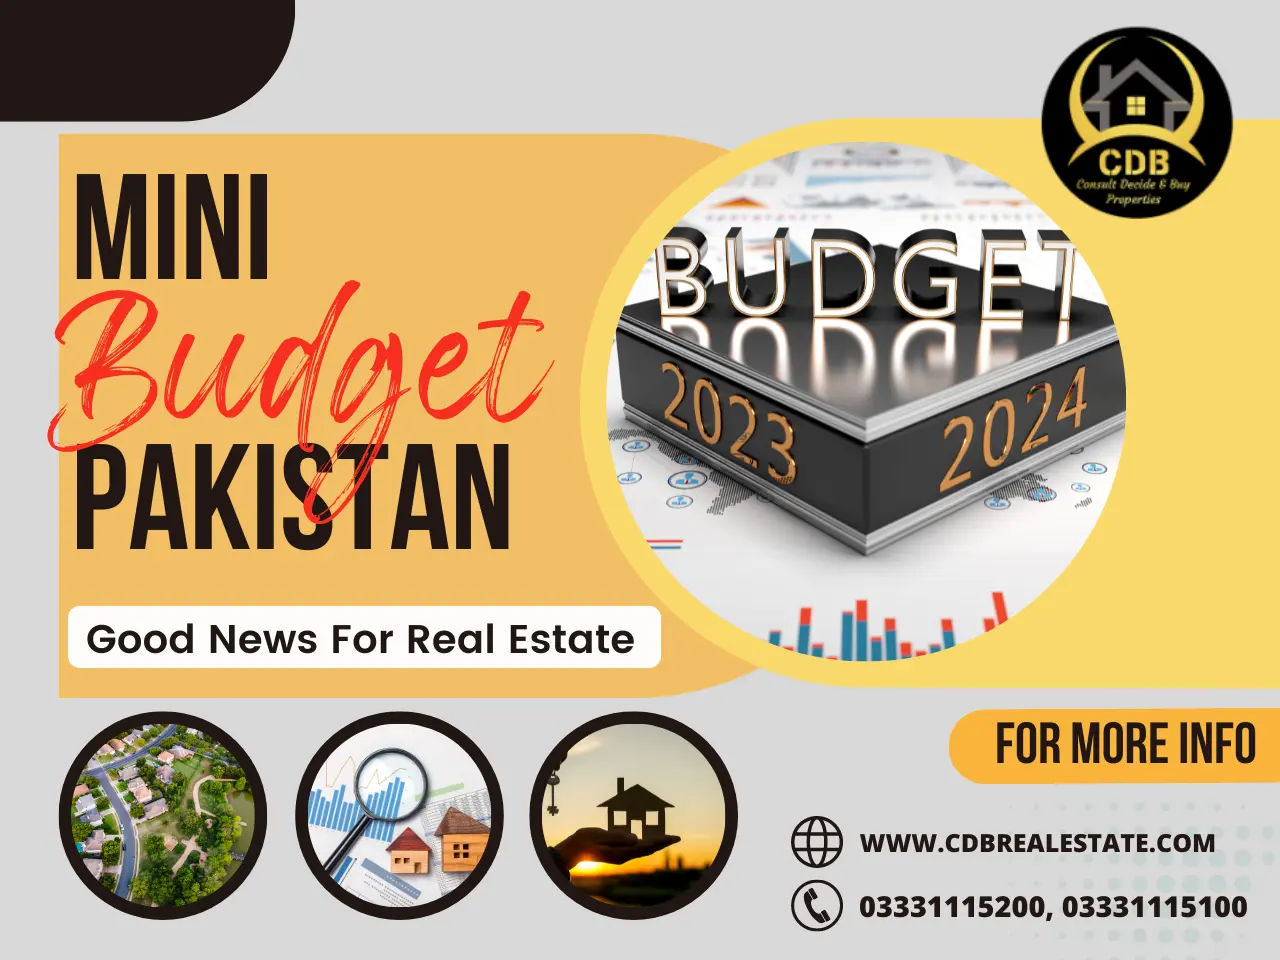 Mini Budget Pakistan Good News For Real Estate